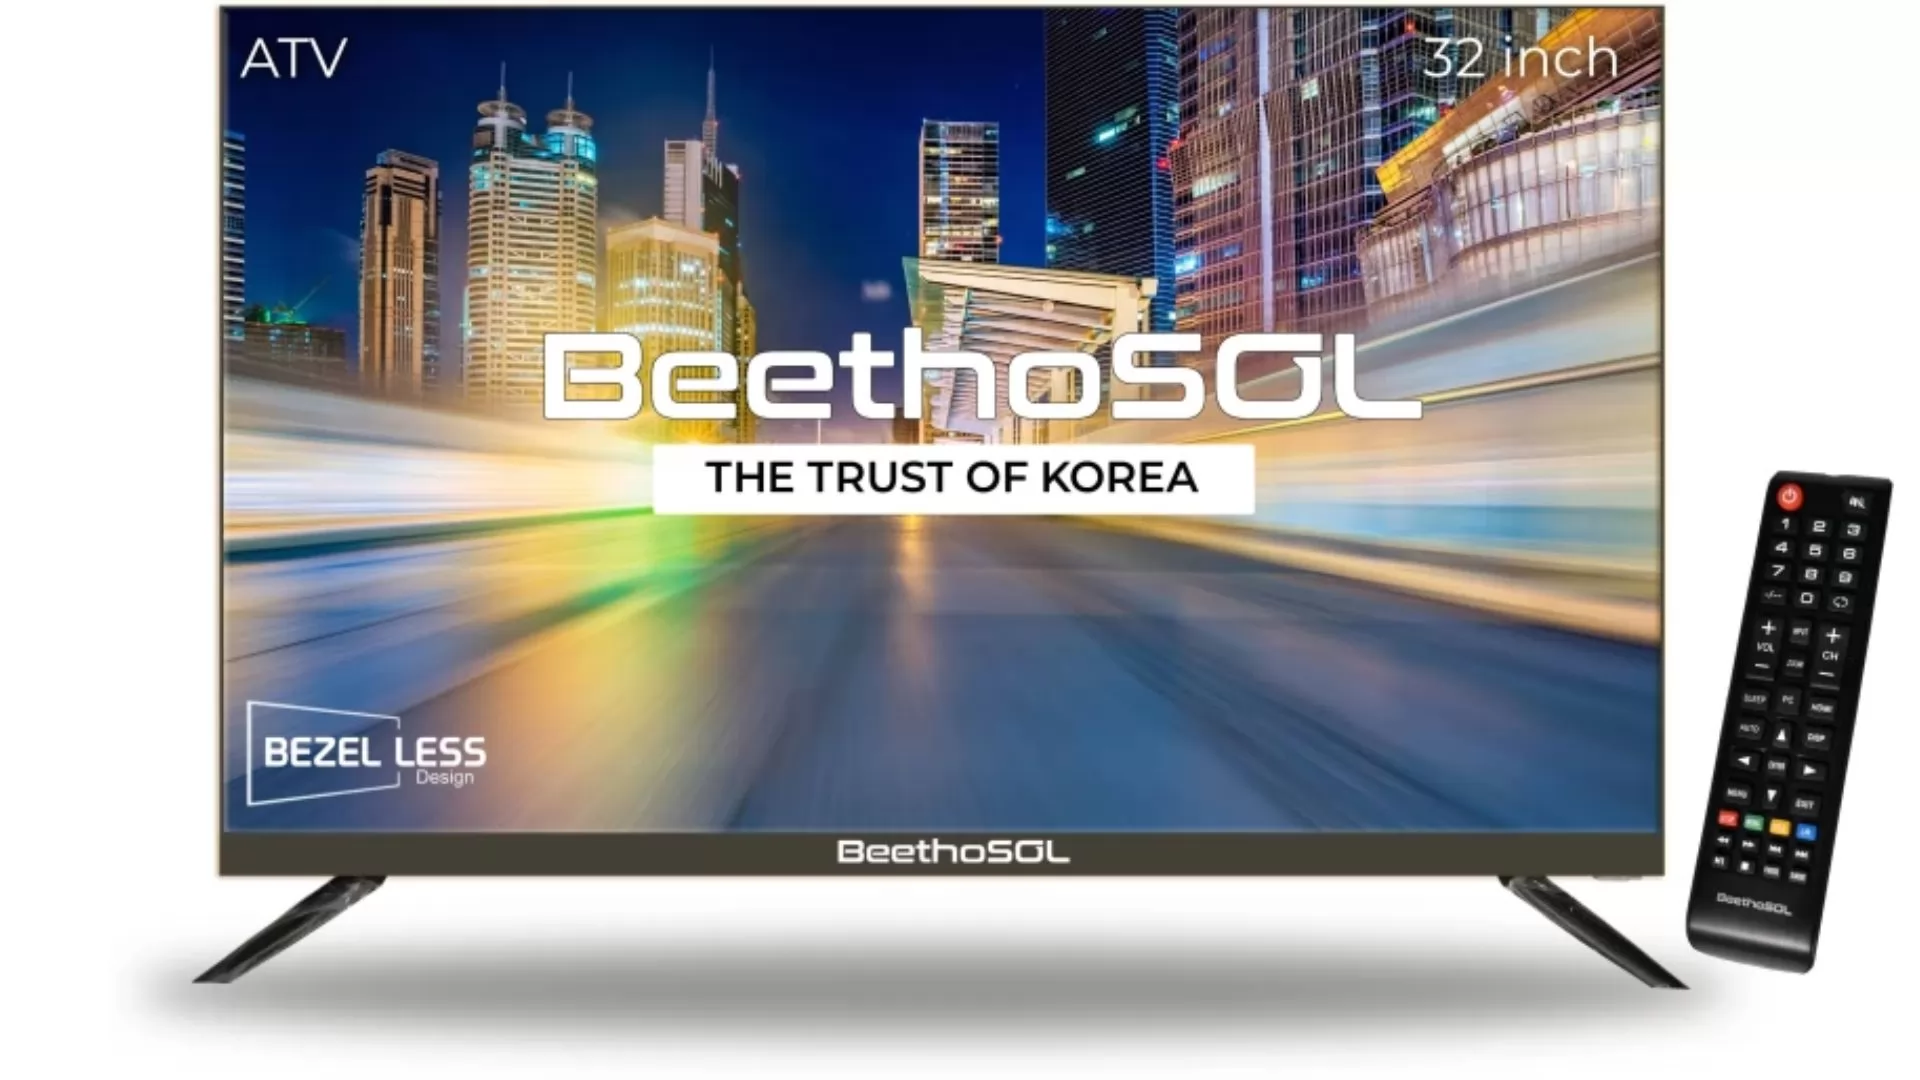 BeethoSOL 80 cm Bezel Less HD Ready LED Smart Android TV